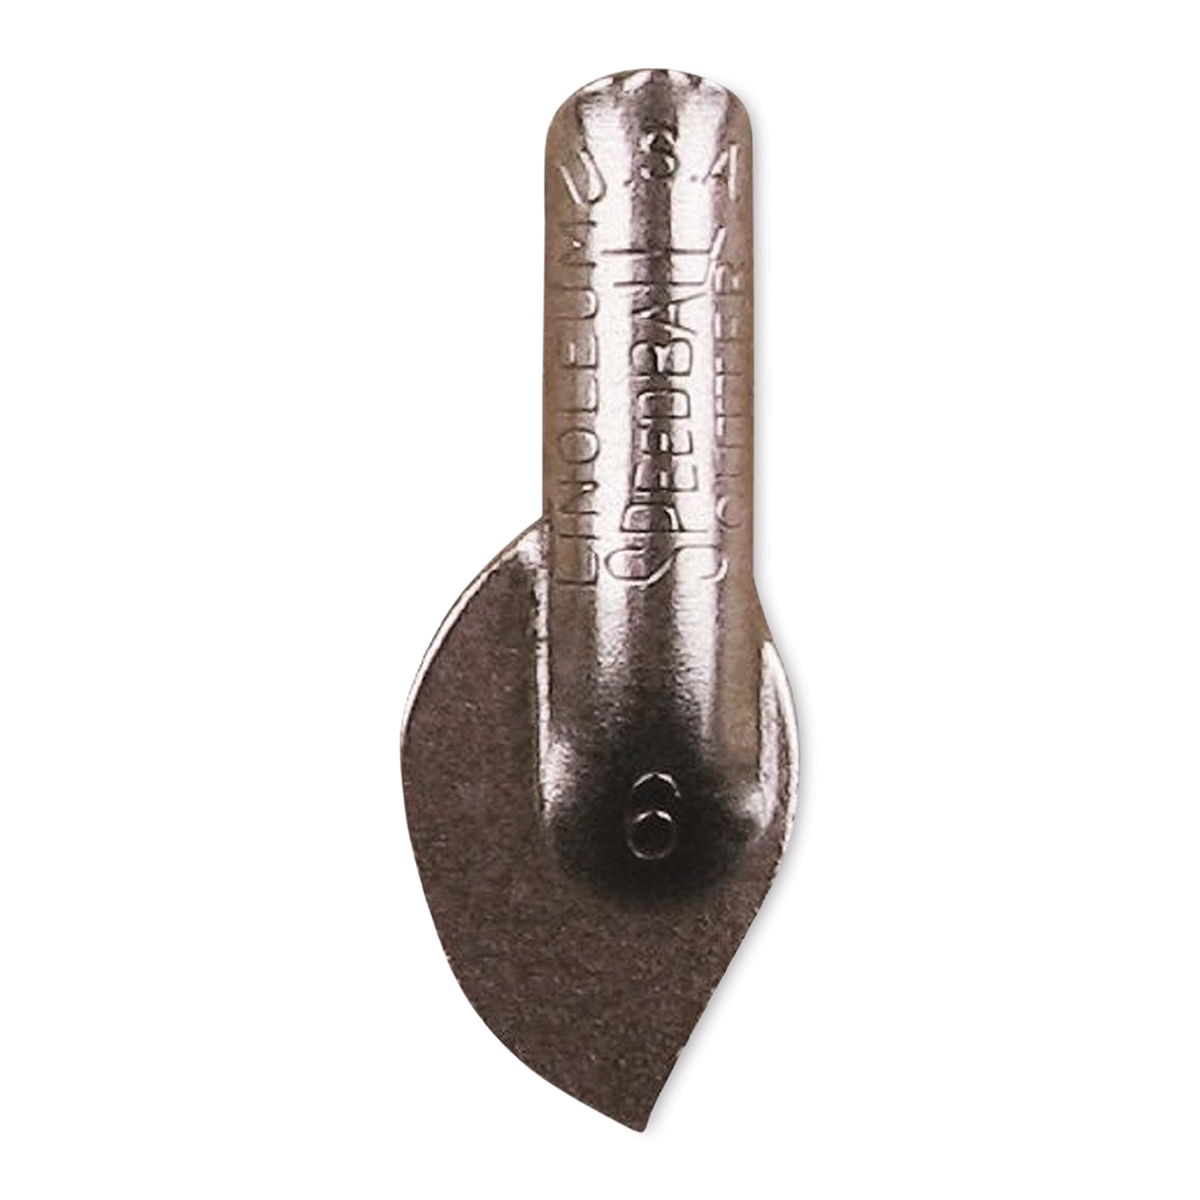  Speedball Linoleum Cutter Kit Assortment #1 - Linocut Carving  Tools for Block Printing, Includes 5 Blades